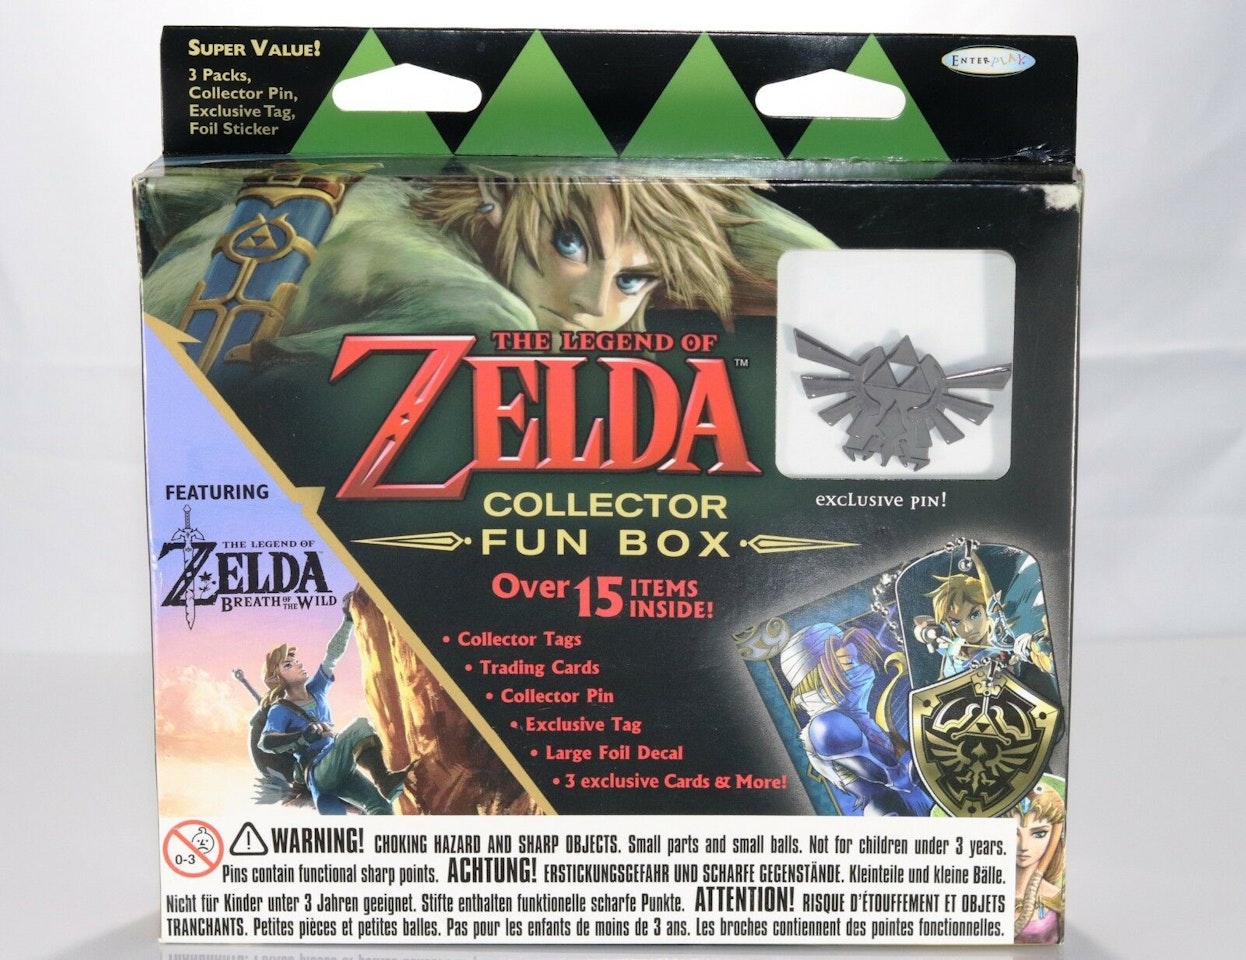 The Legend of Zelda COLLECTOR'S FUN BOX